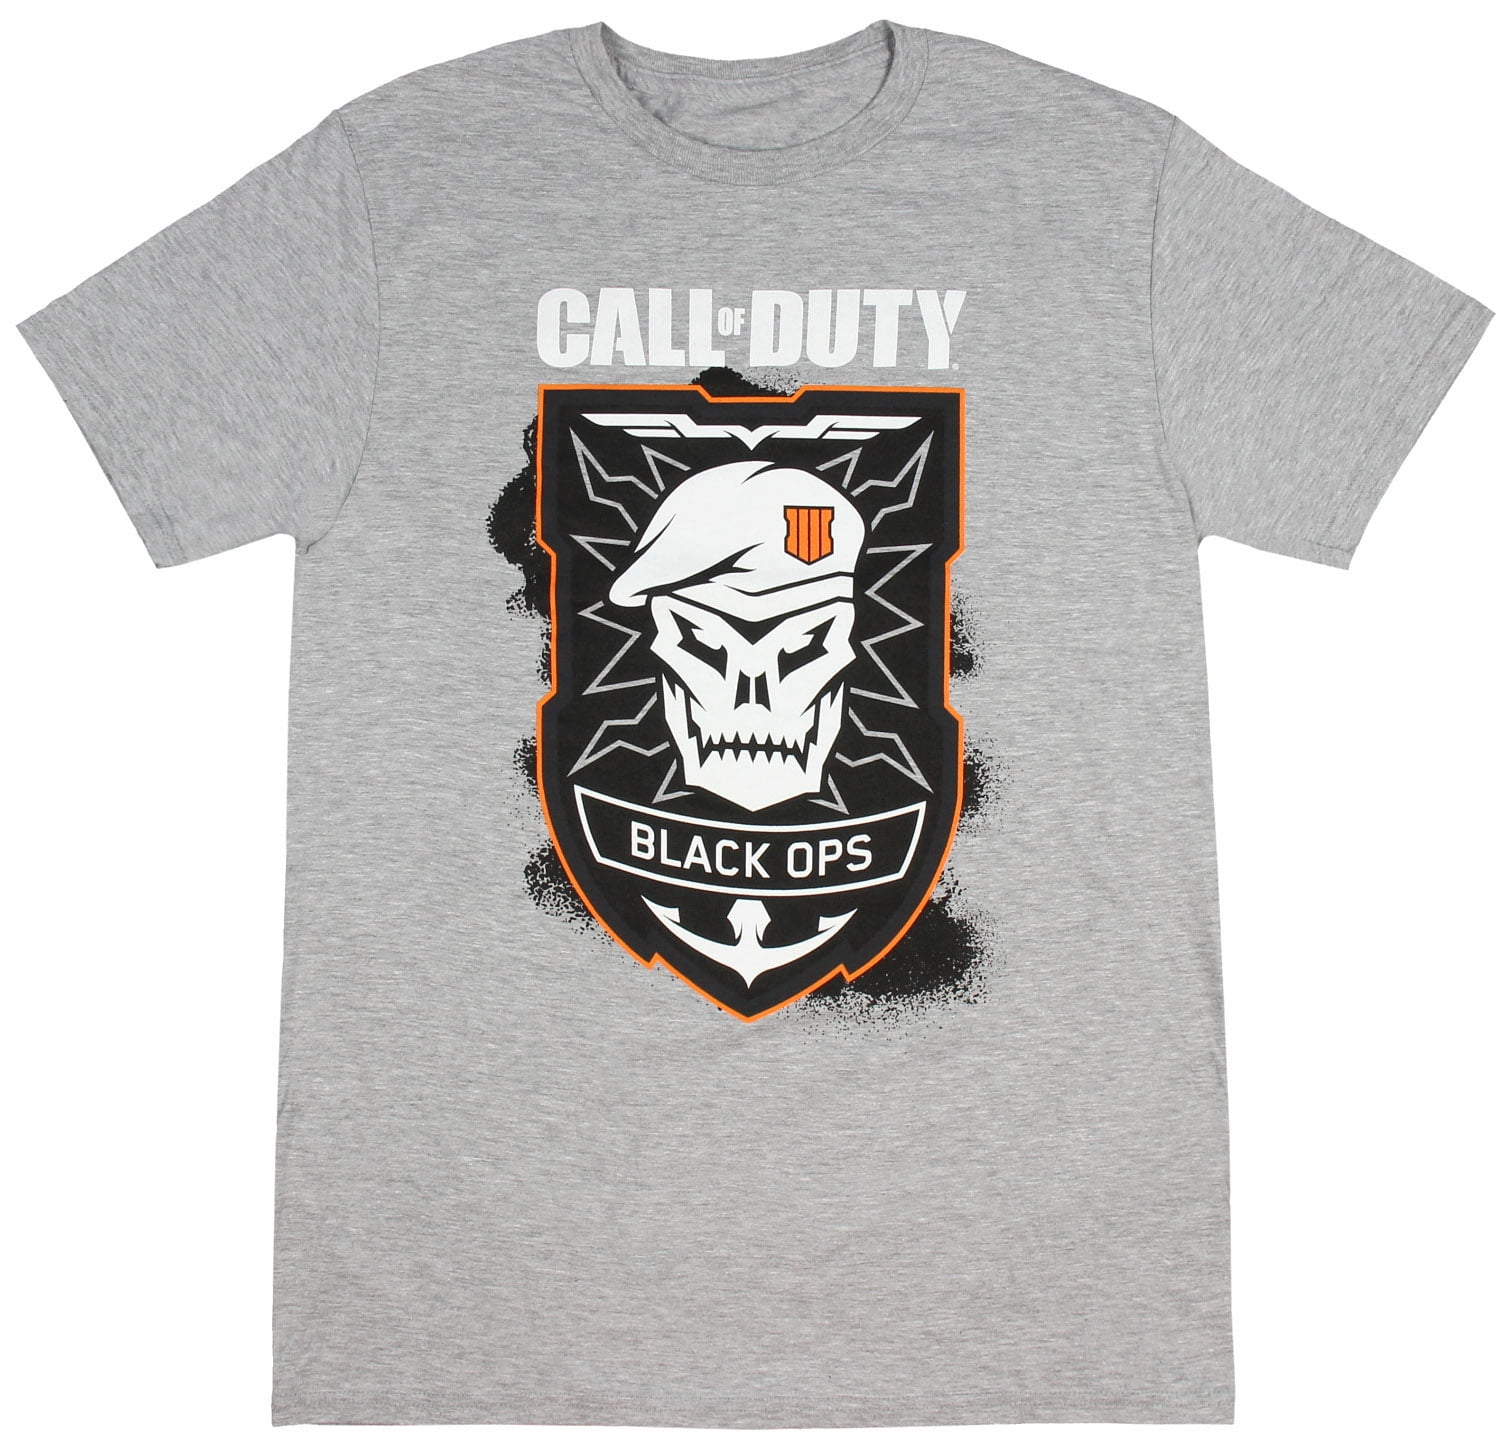 Call of Duty Black Ops 4 shirt Men's Skull Badge Graphic T-Shirt (Small ...